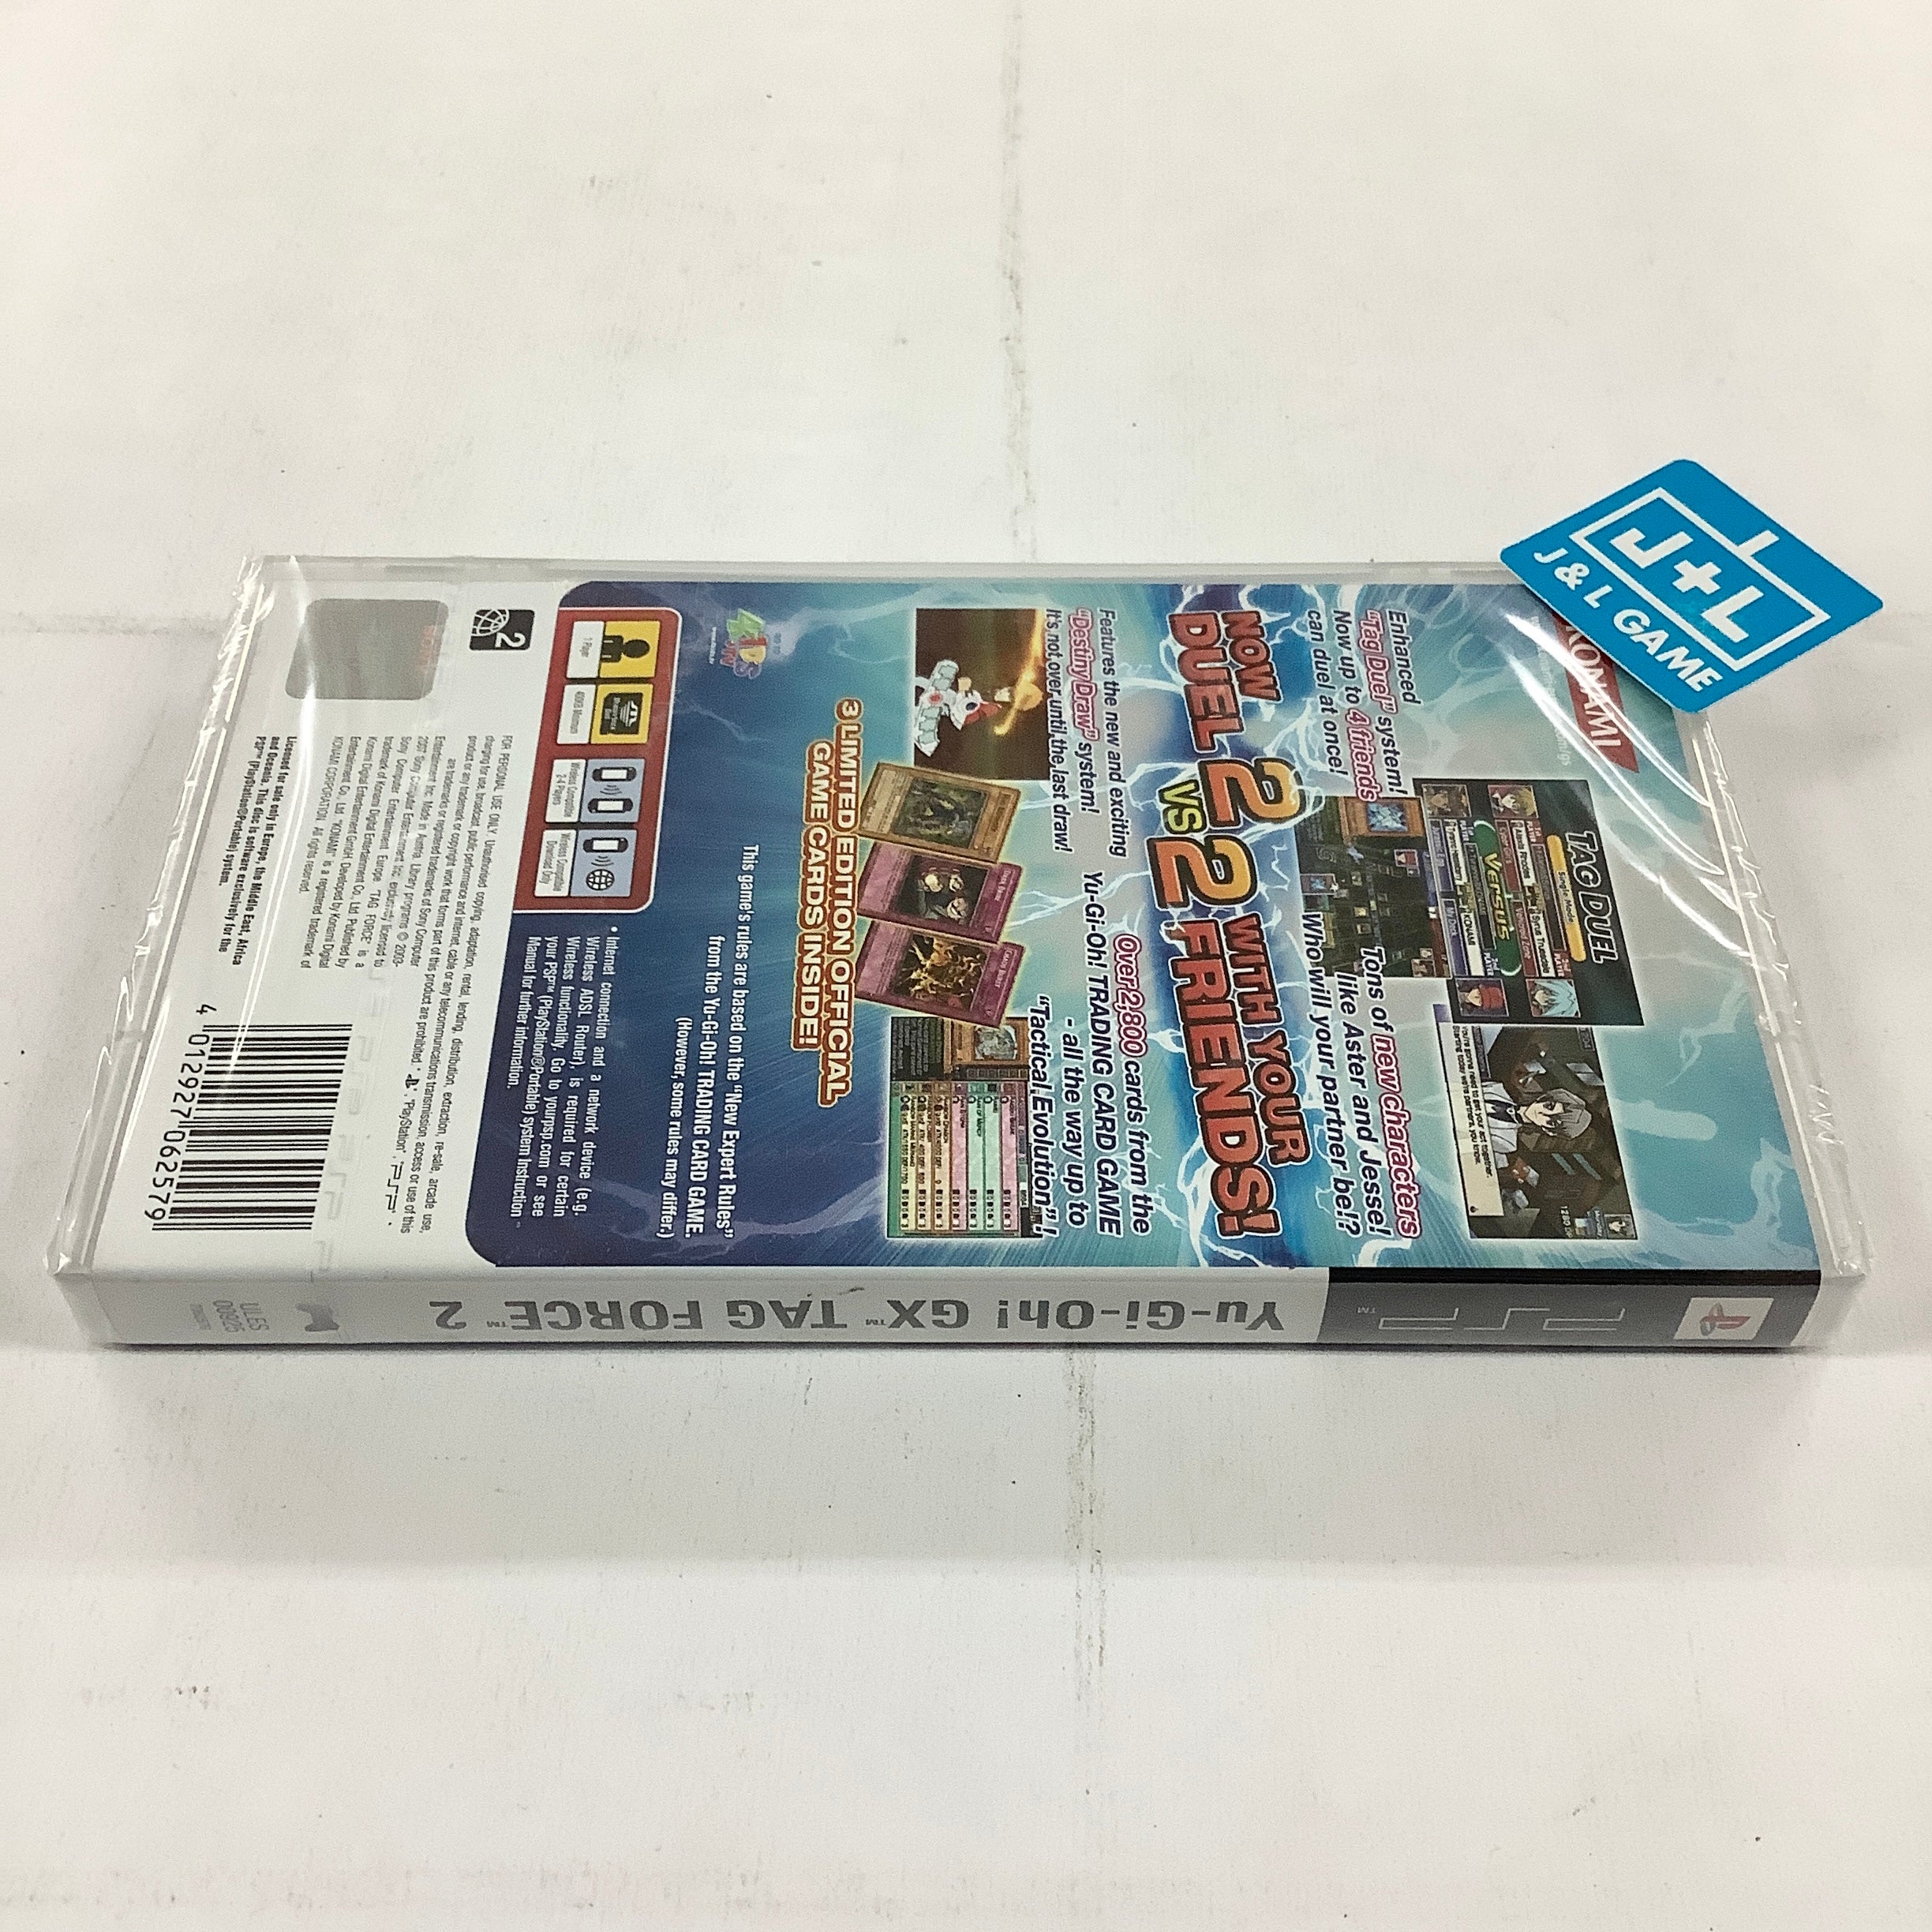 Yu-Gi-Oh! GX Tag Force 2 - Sony PSP (European Import) Video Games Konami   